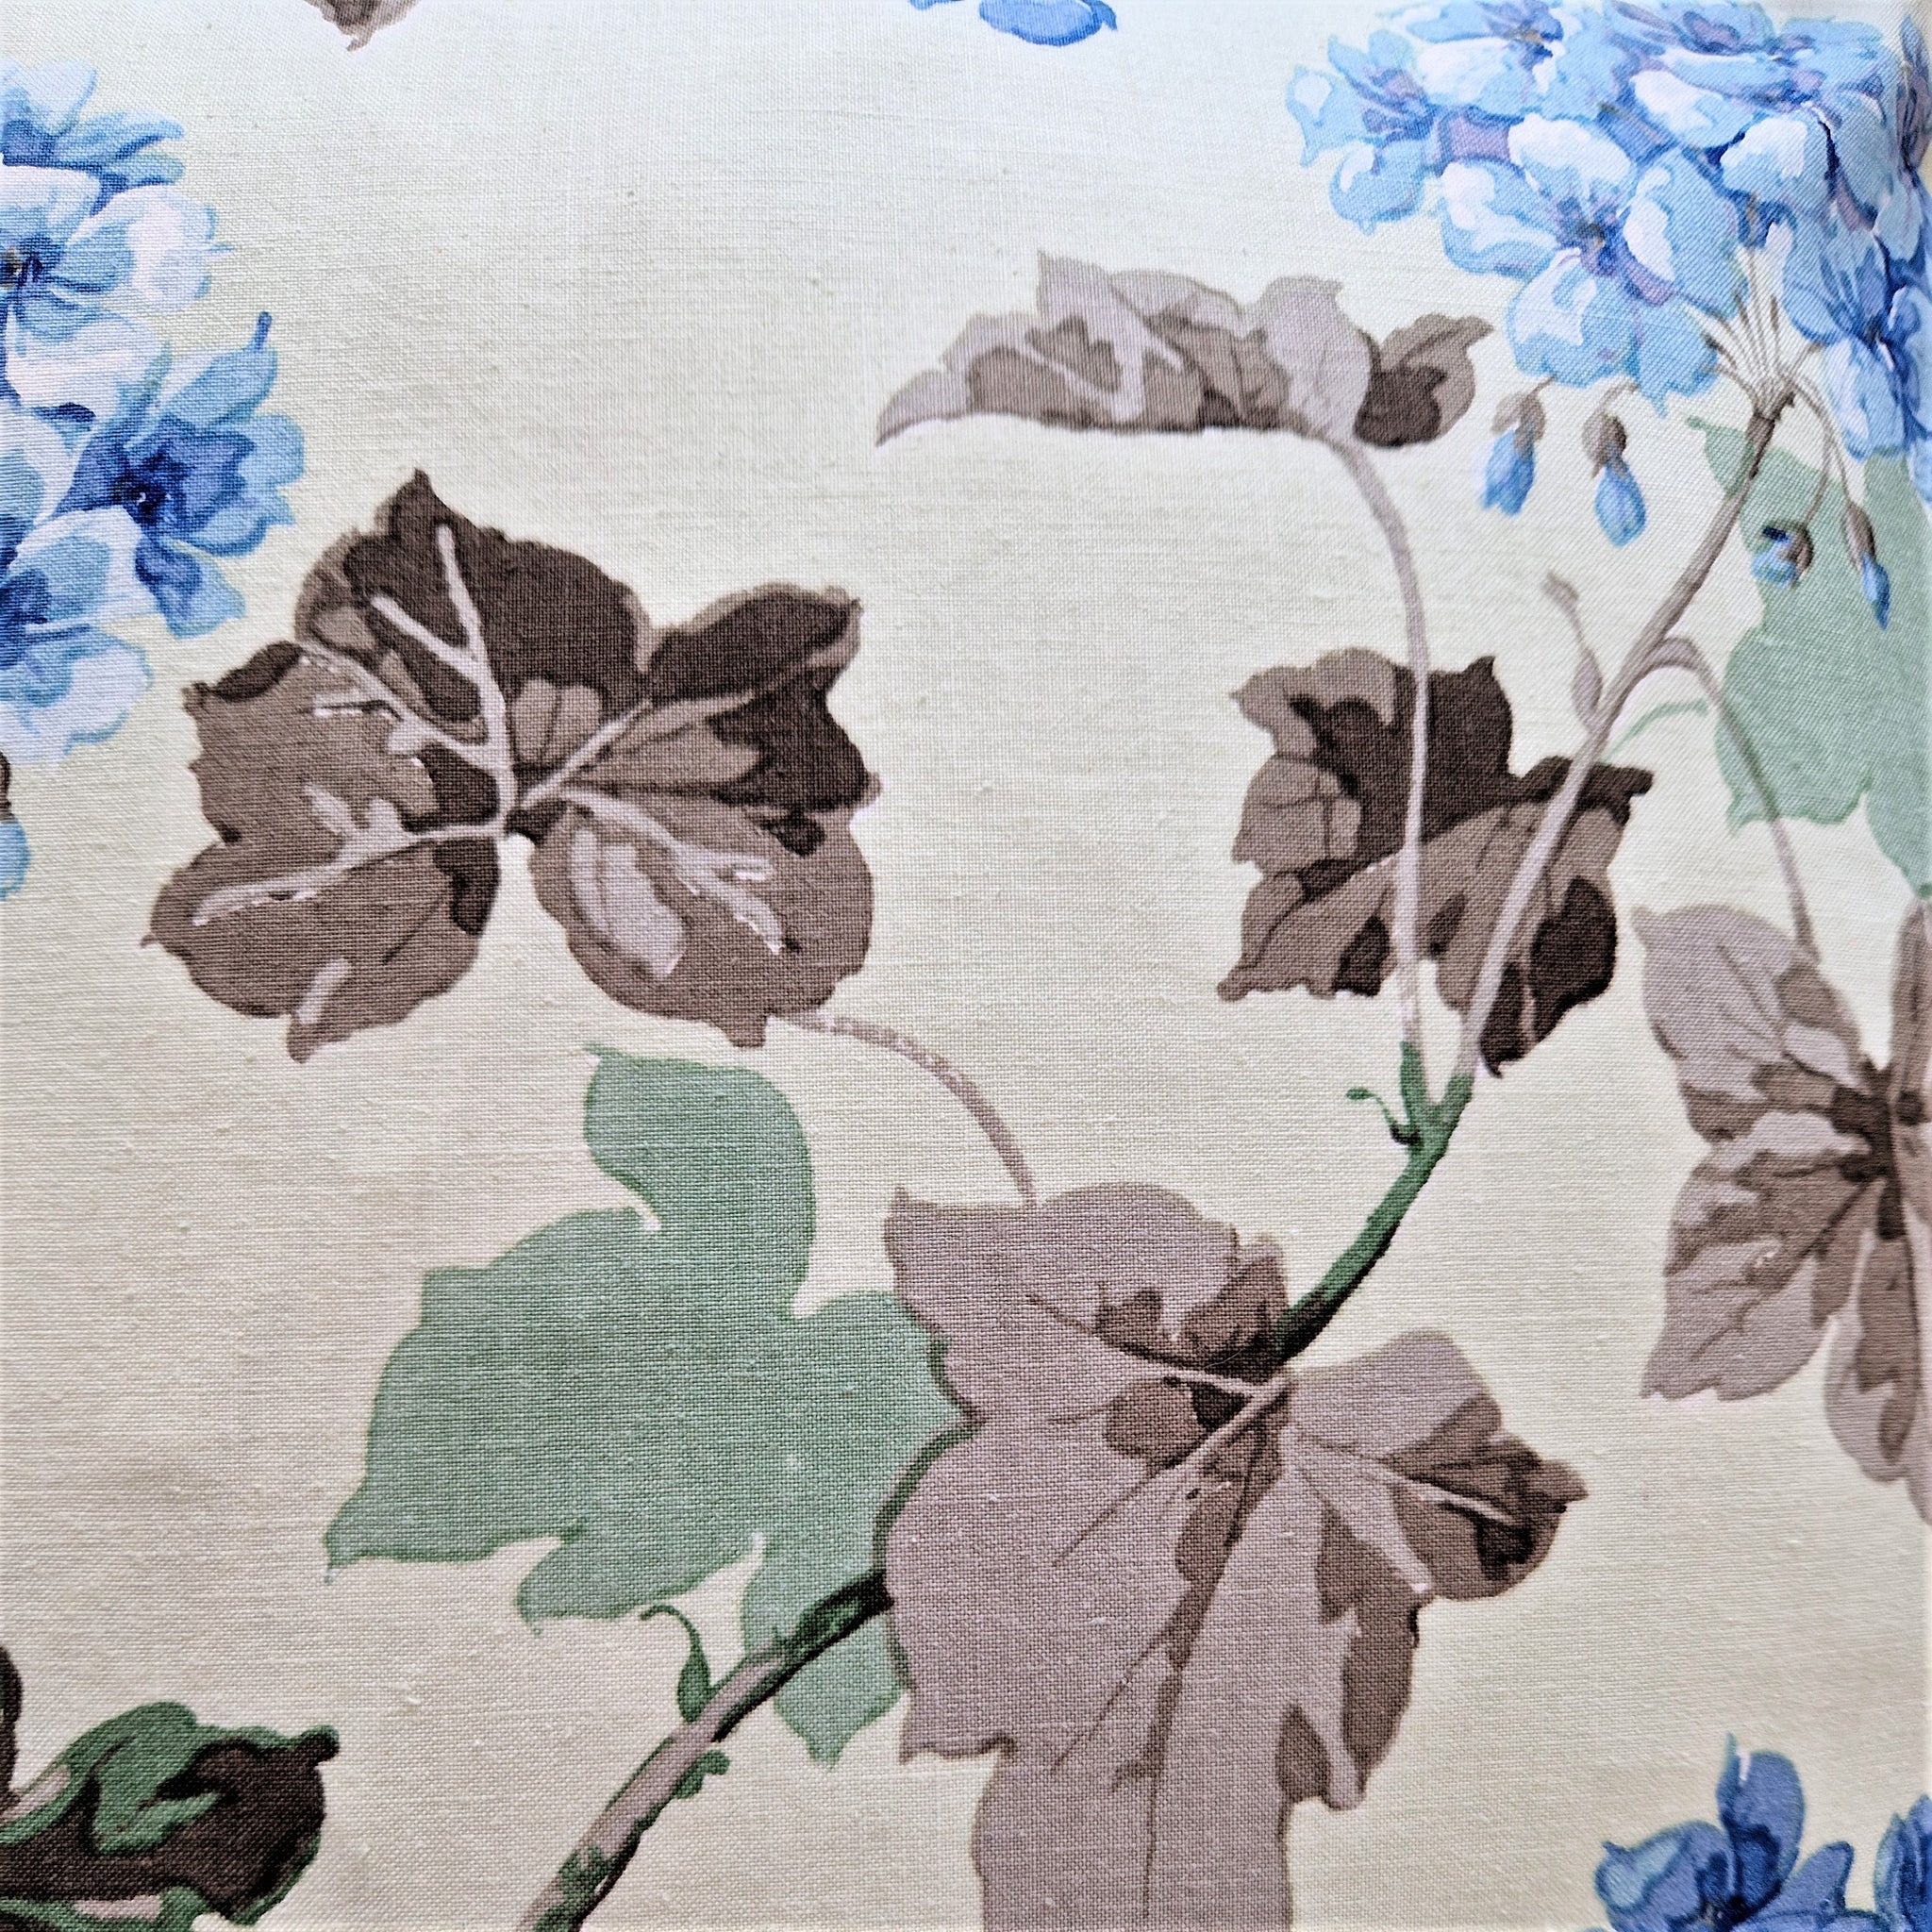 Vintage Floral Cushion Cover In Sanderson 'Pella' design - 16 inch